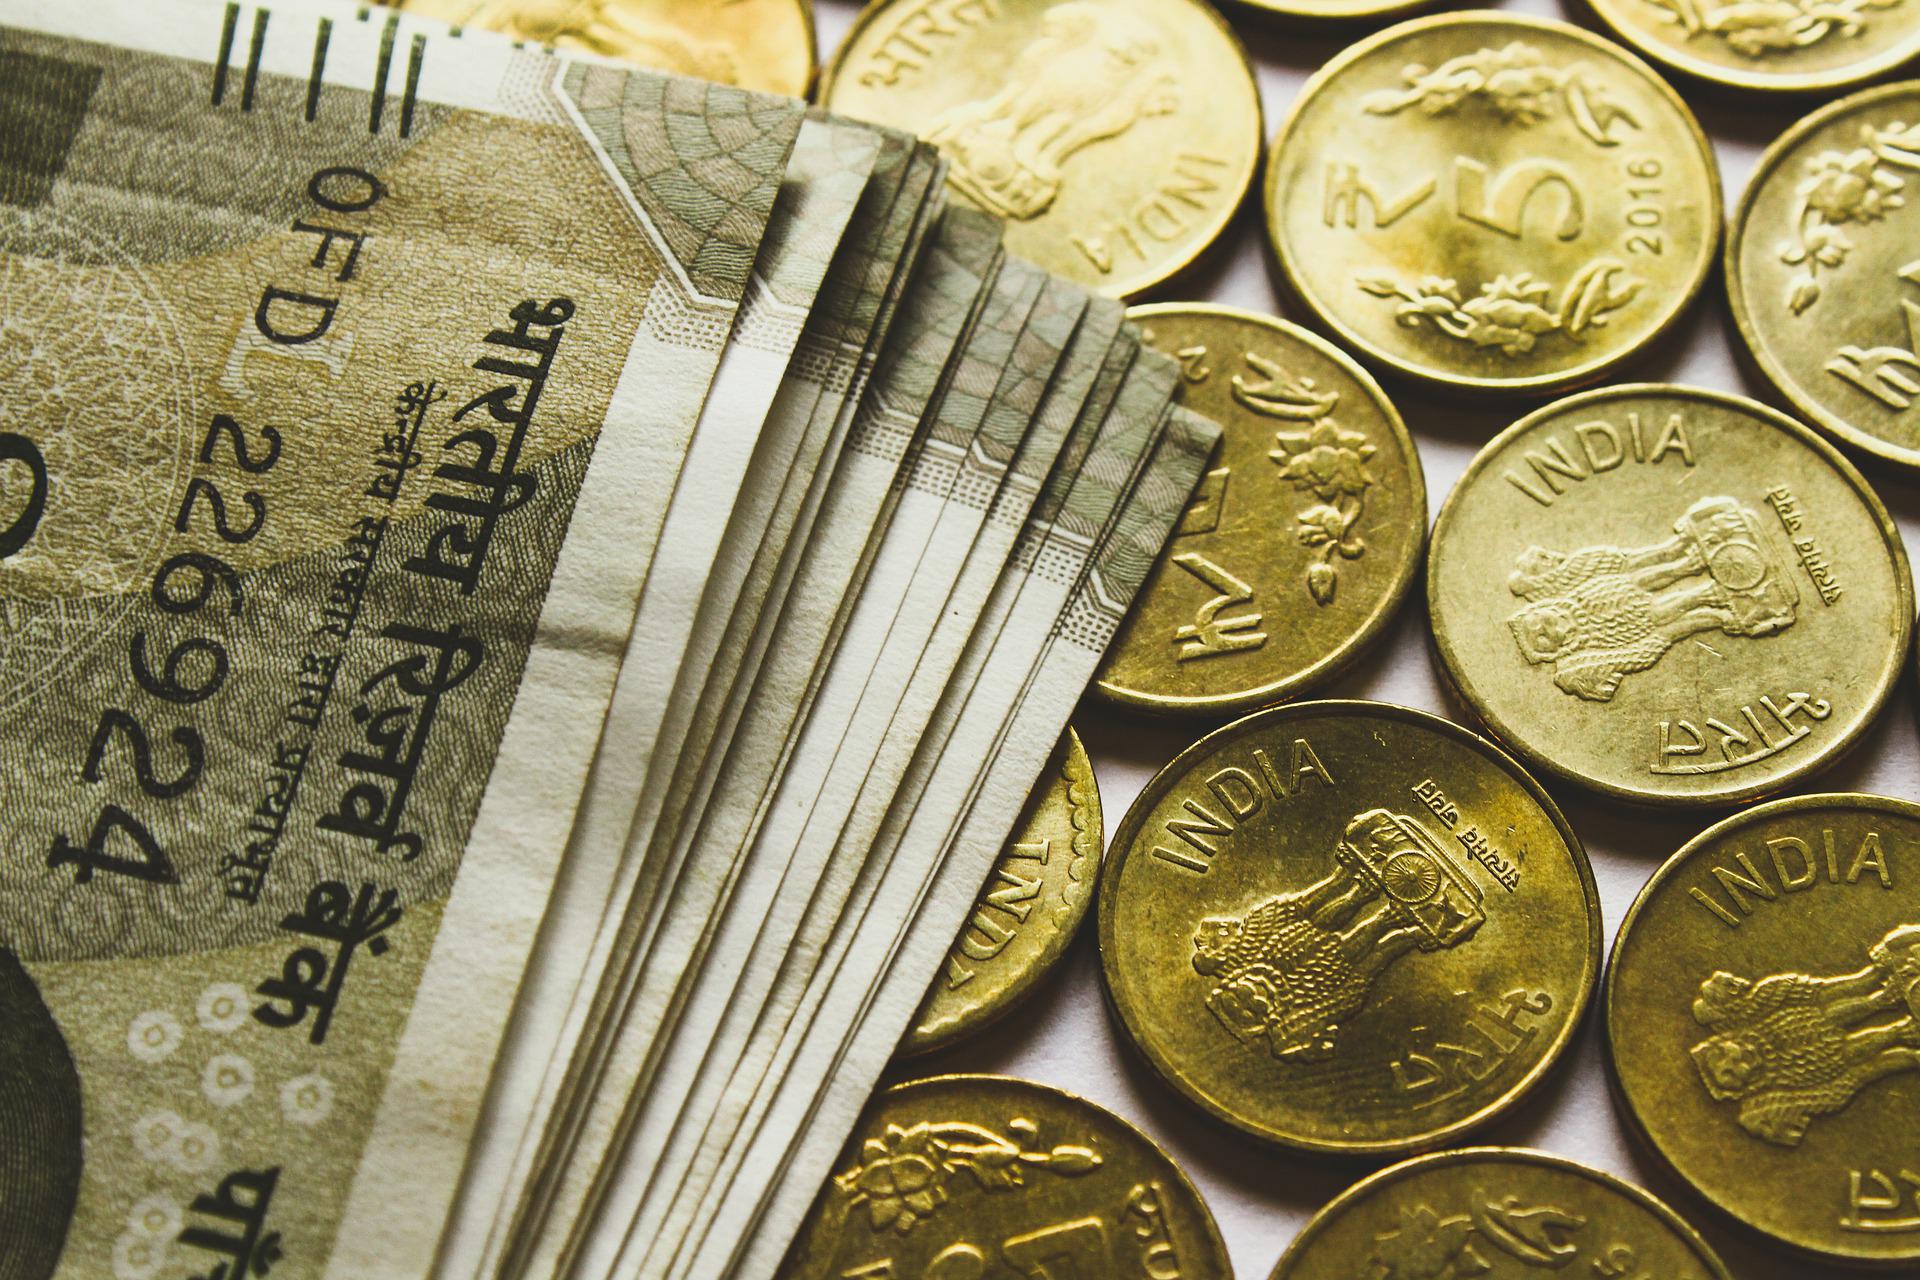 Tamil Nadu: OPS seeks to retain control of AIADMK bank accounts